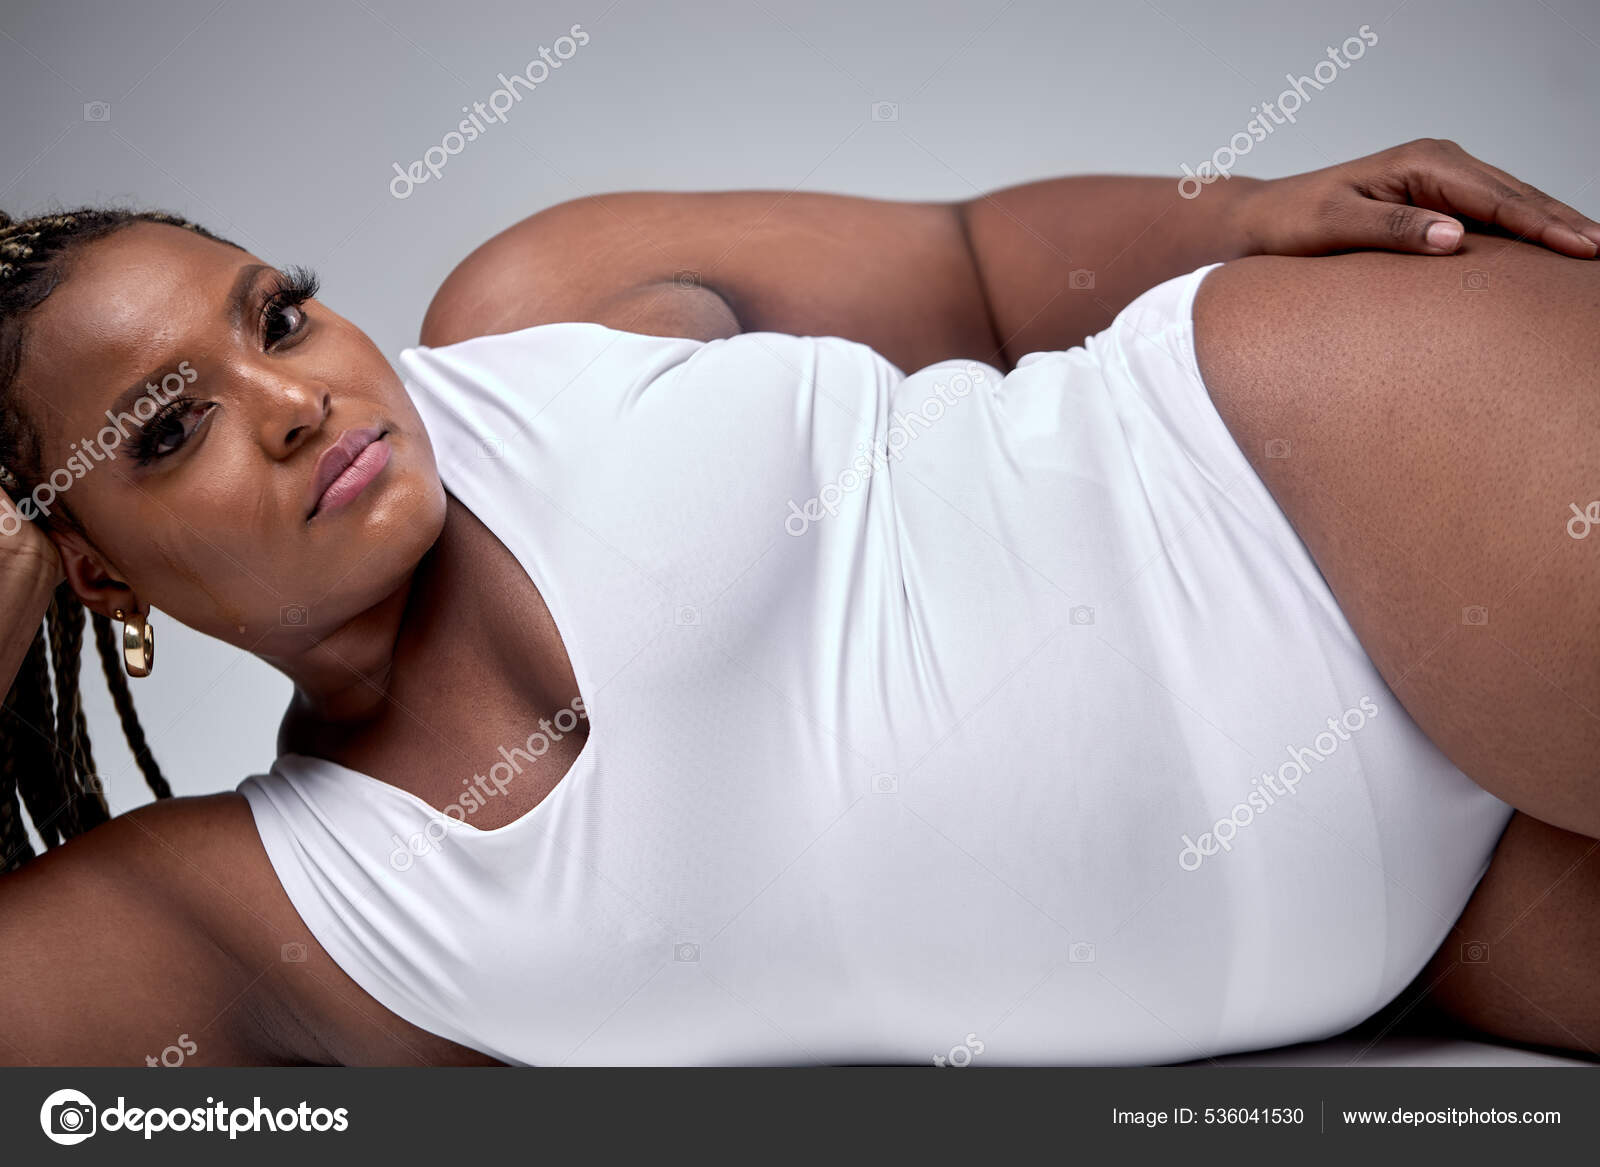 https://st.depositphotos.com/32281612/53604/i/1600/depositphotos_536041530-stock-photo-adorable-young-sexy-fat-woman.jpg